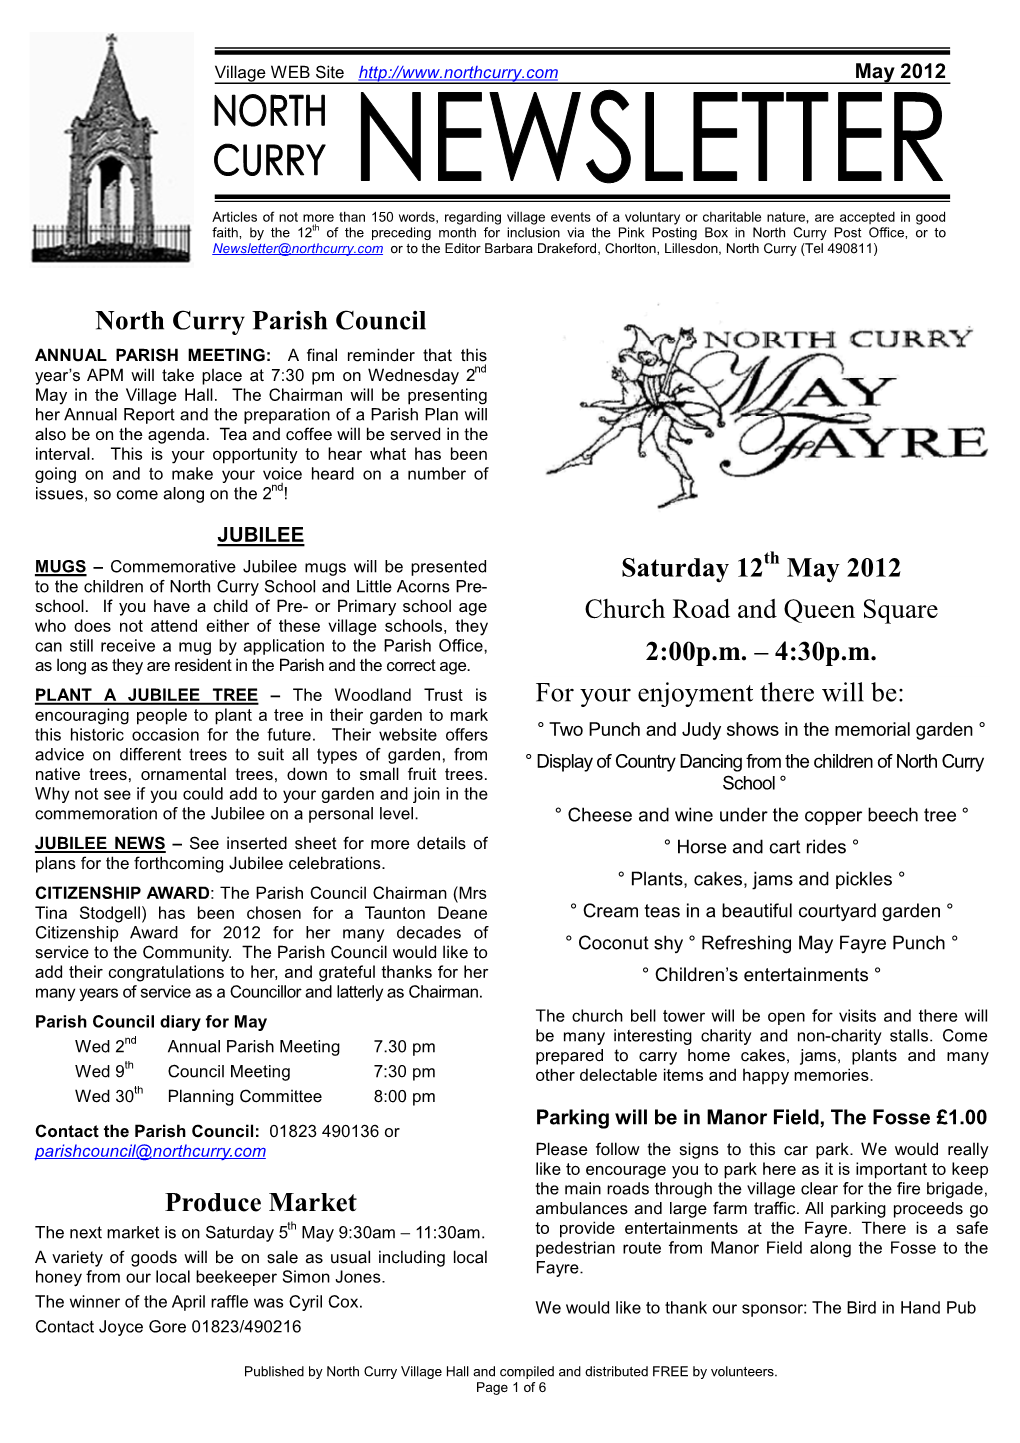 North Curry Parish Council Produce Market Saturday 12Th May 2012